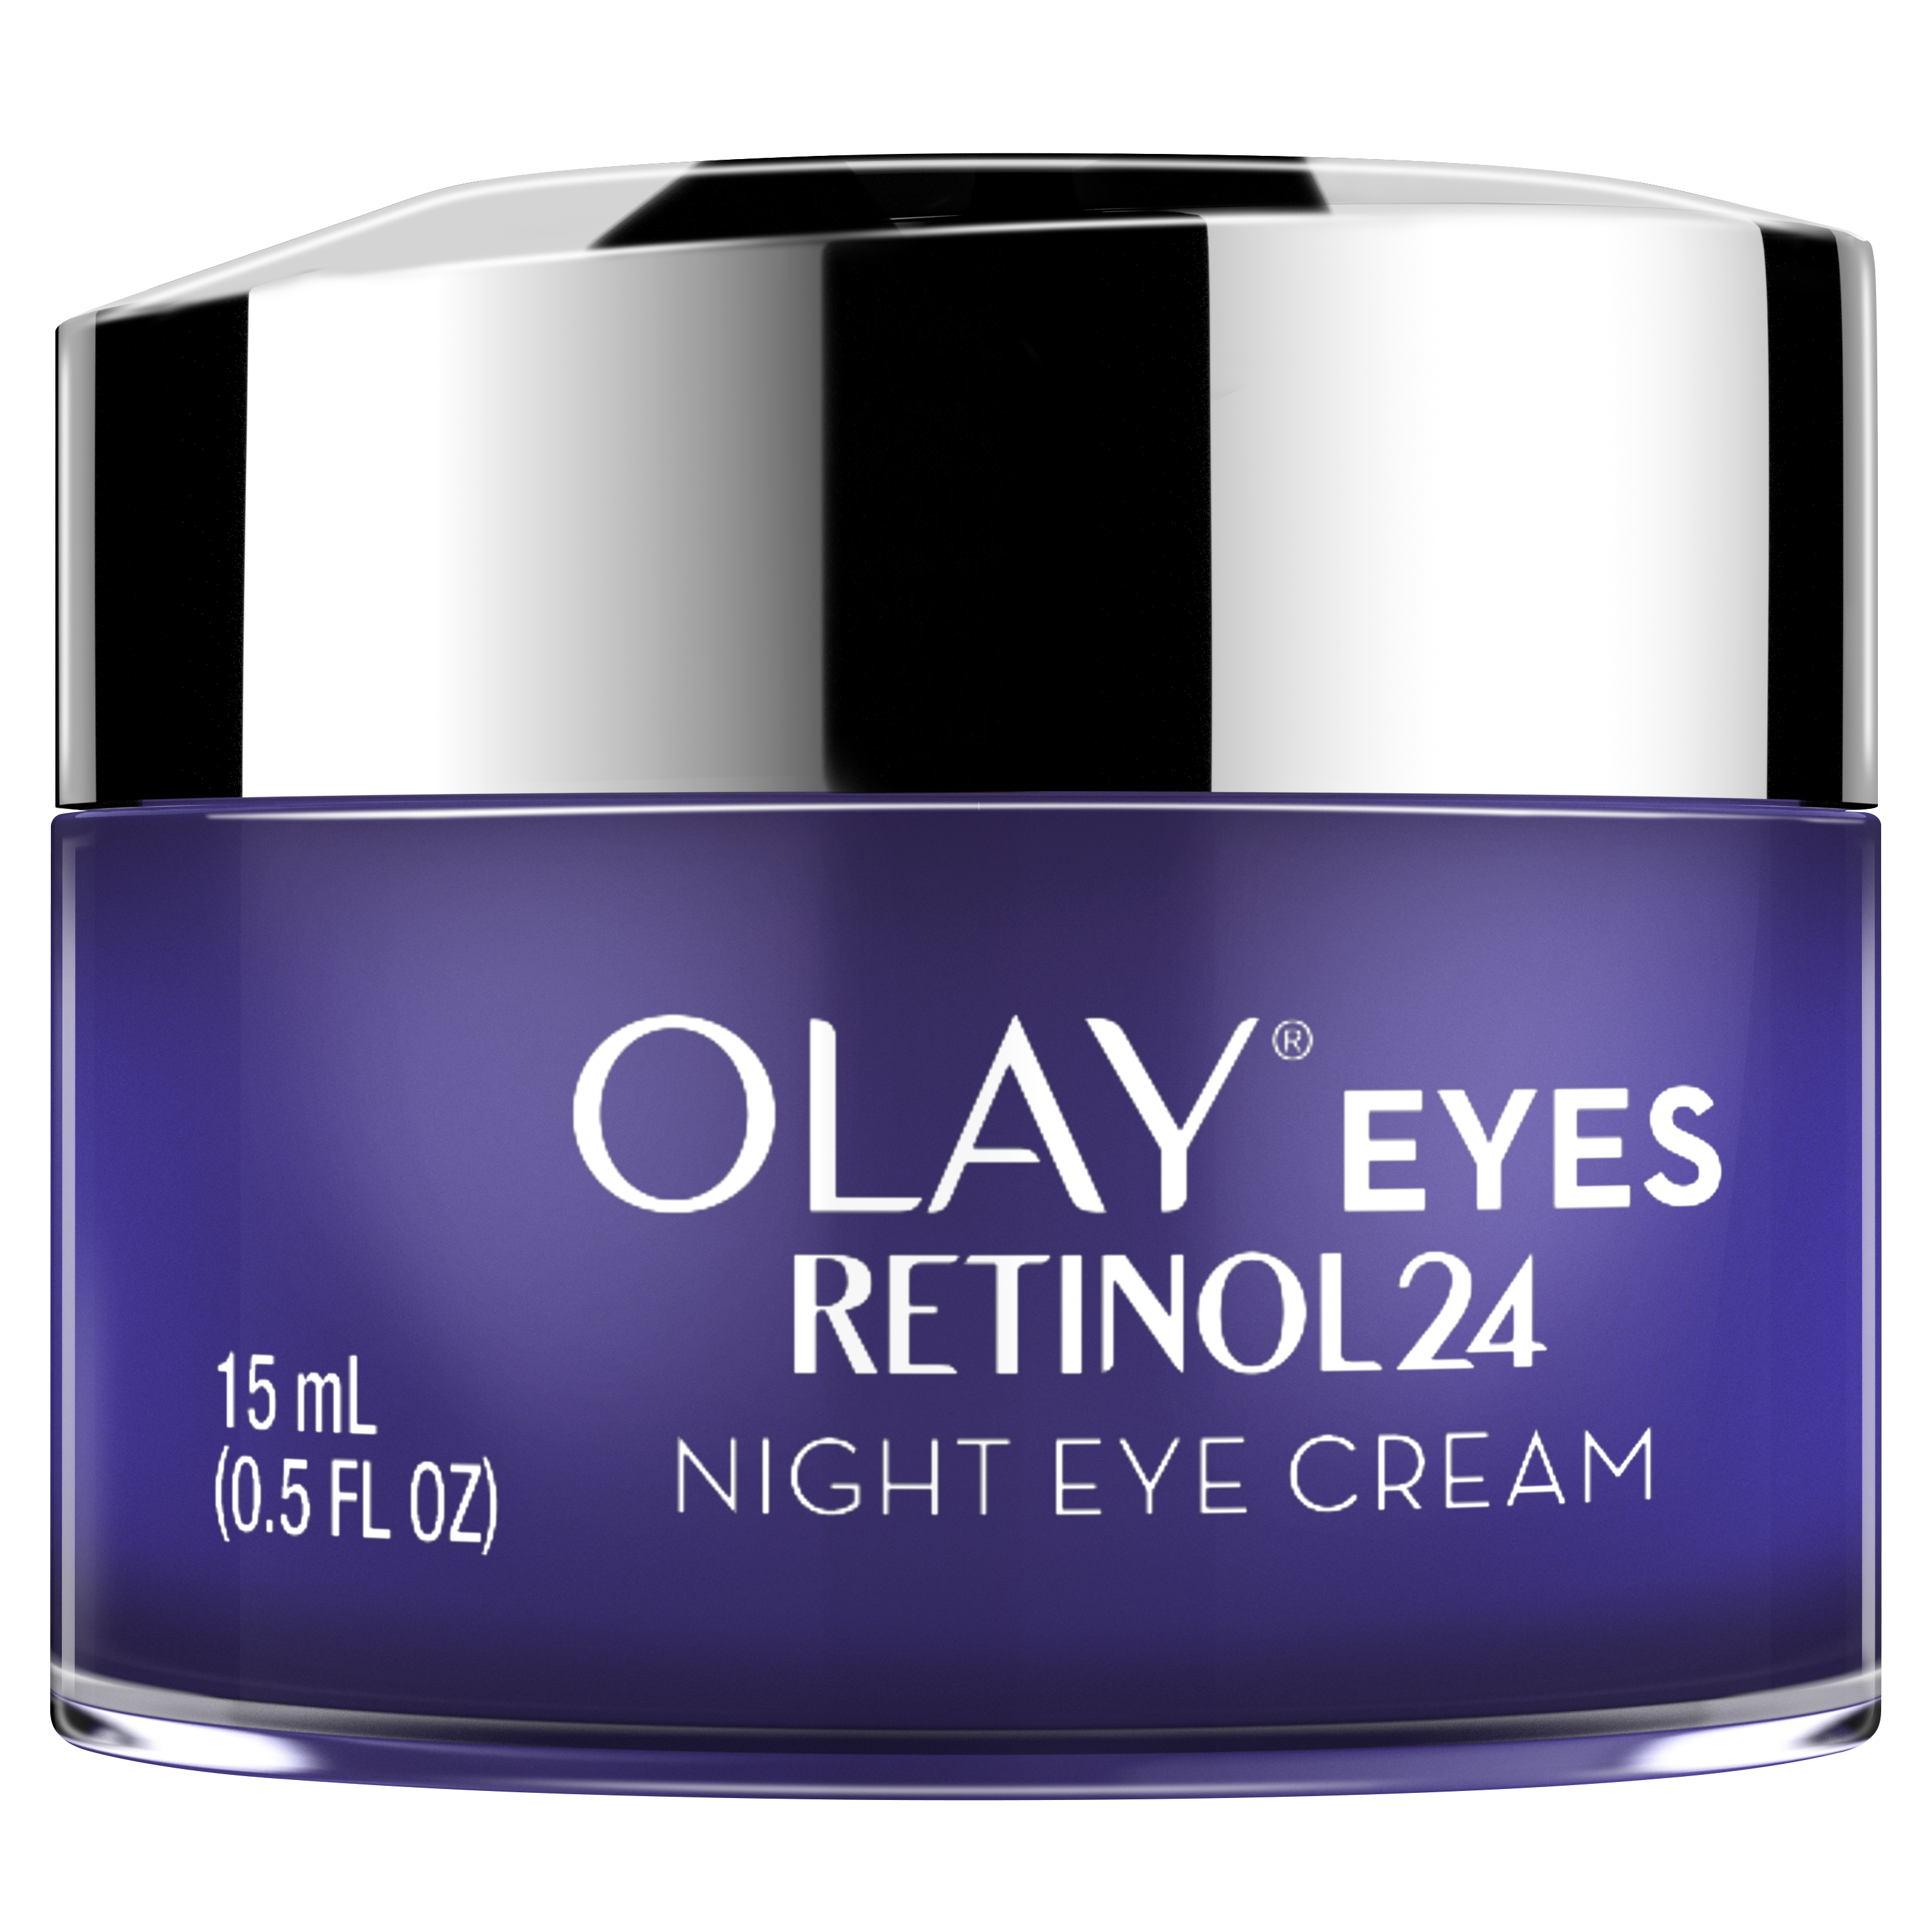 Olay Eyes Retinol24 Night Eye Cream 15 mL